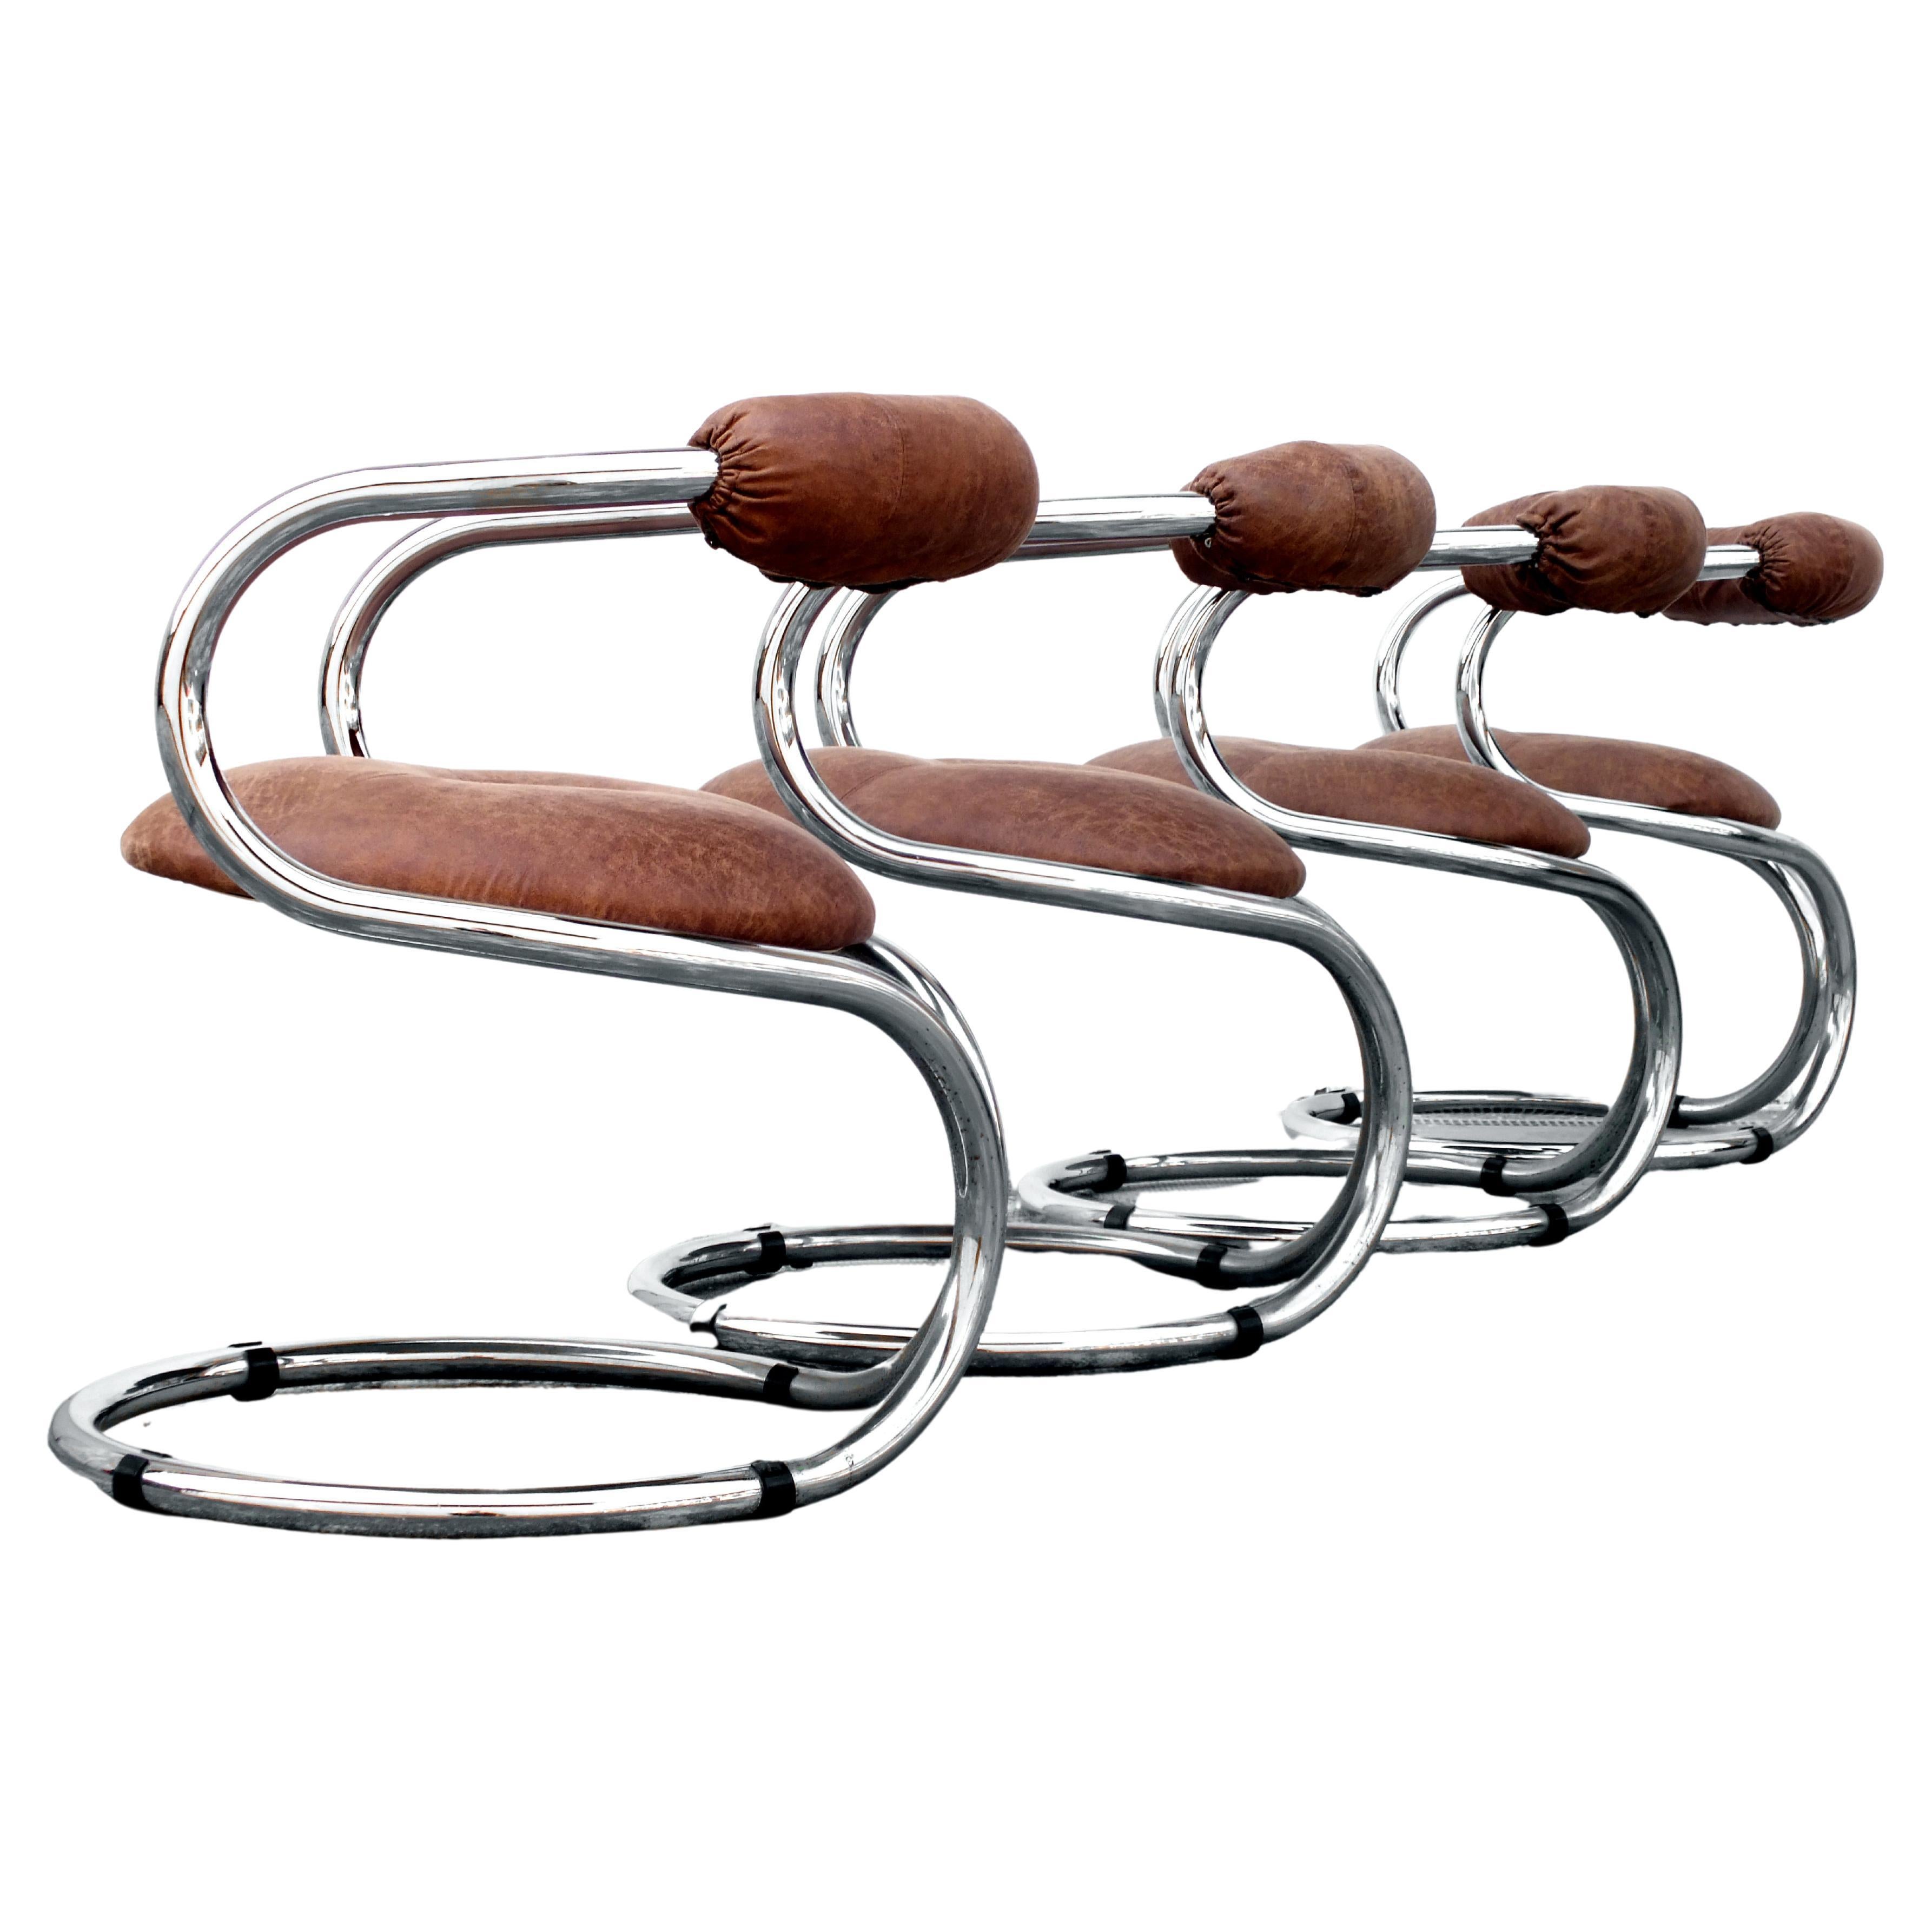 1970s Bonzanini Rudy Design for Tecnosalotto Mantova Italy Chairs, Set of 4